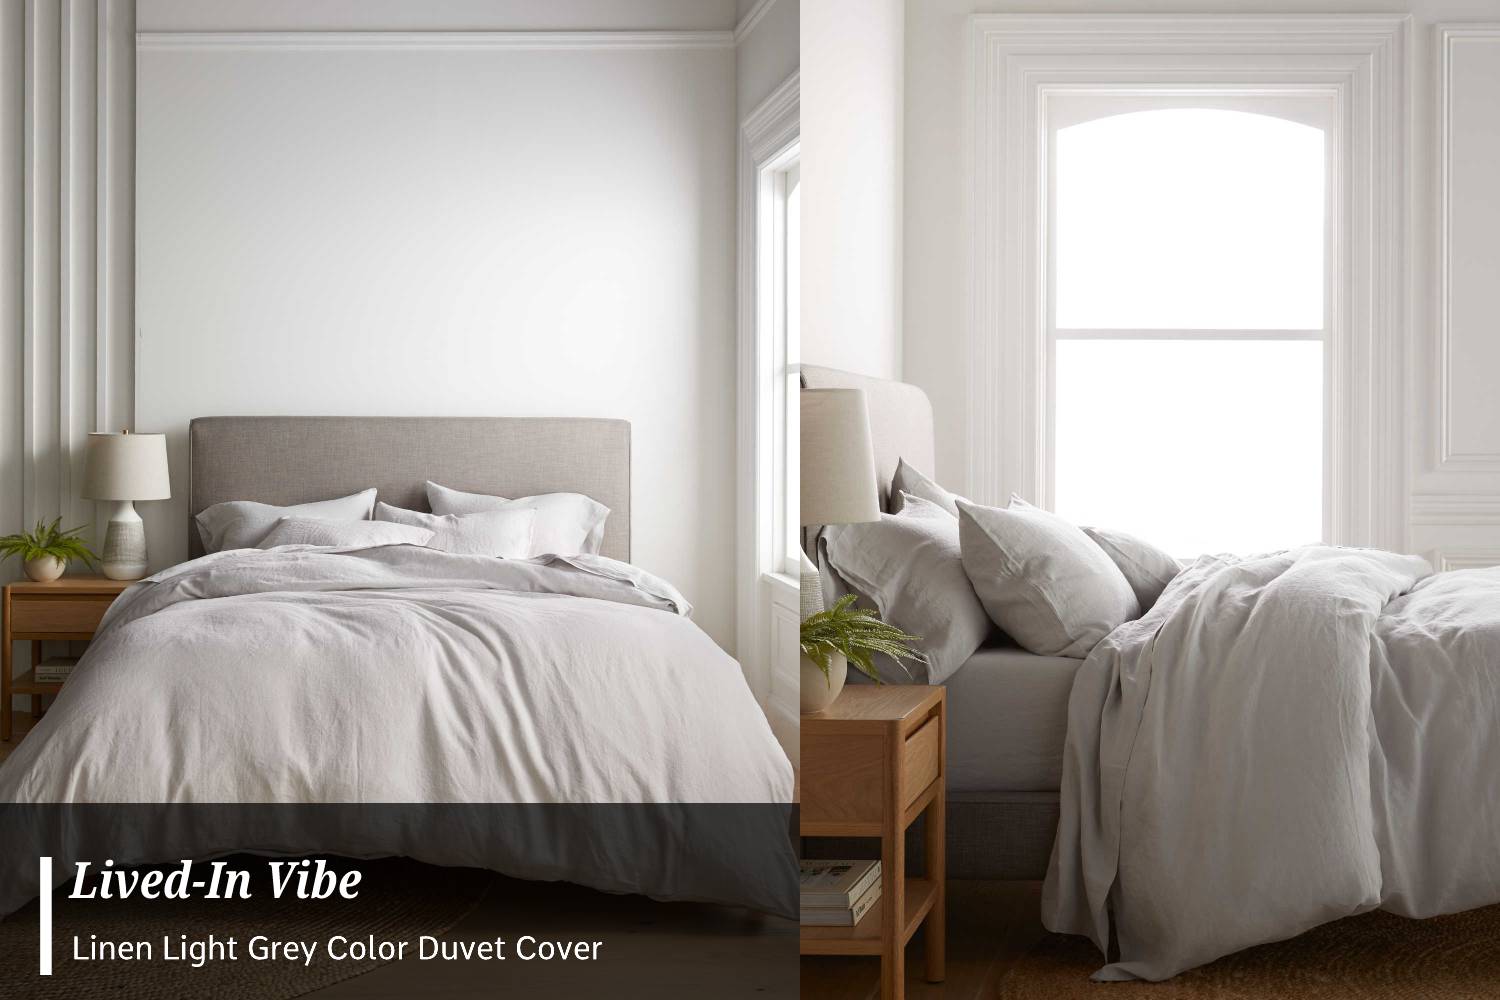 Lived-in Vibe: Linen Light Grey color duvet cover